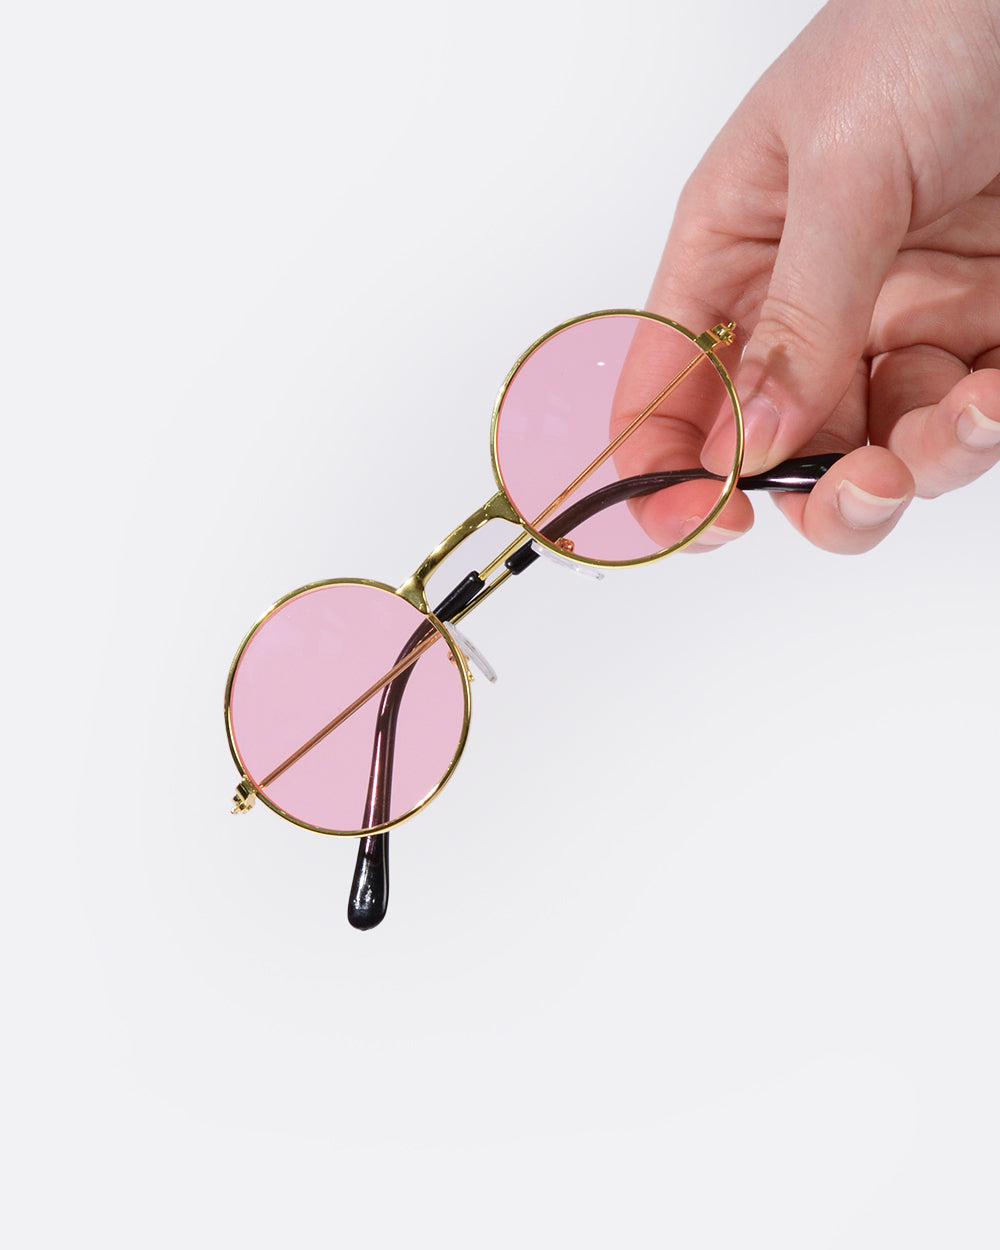 Tinted Lens Dog Glasses - Pink